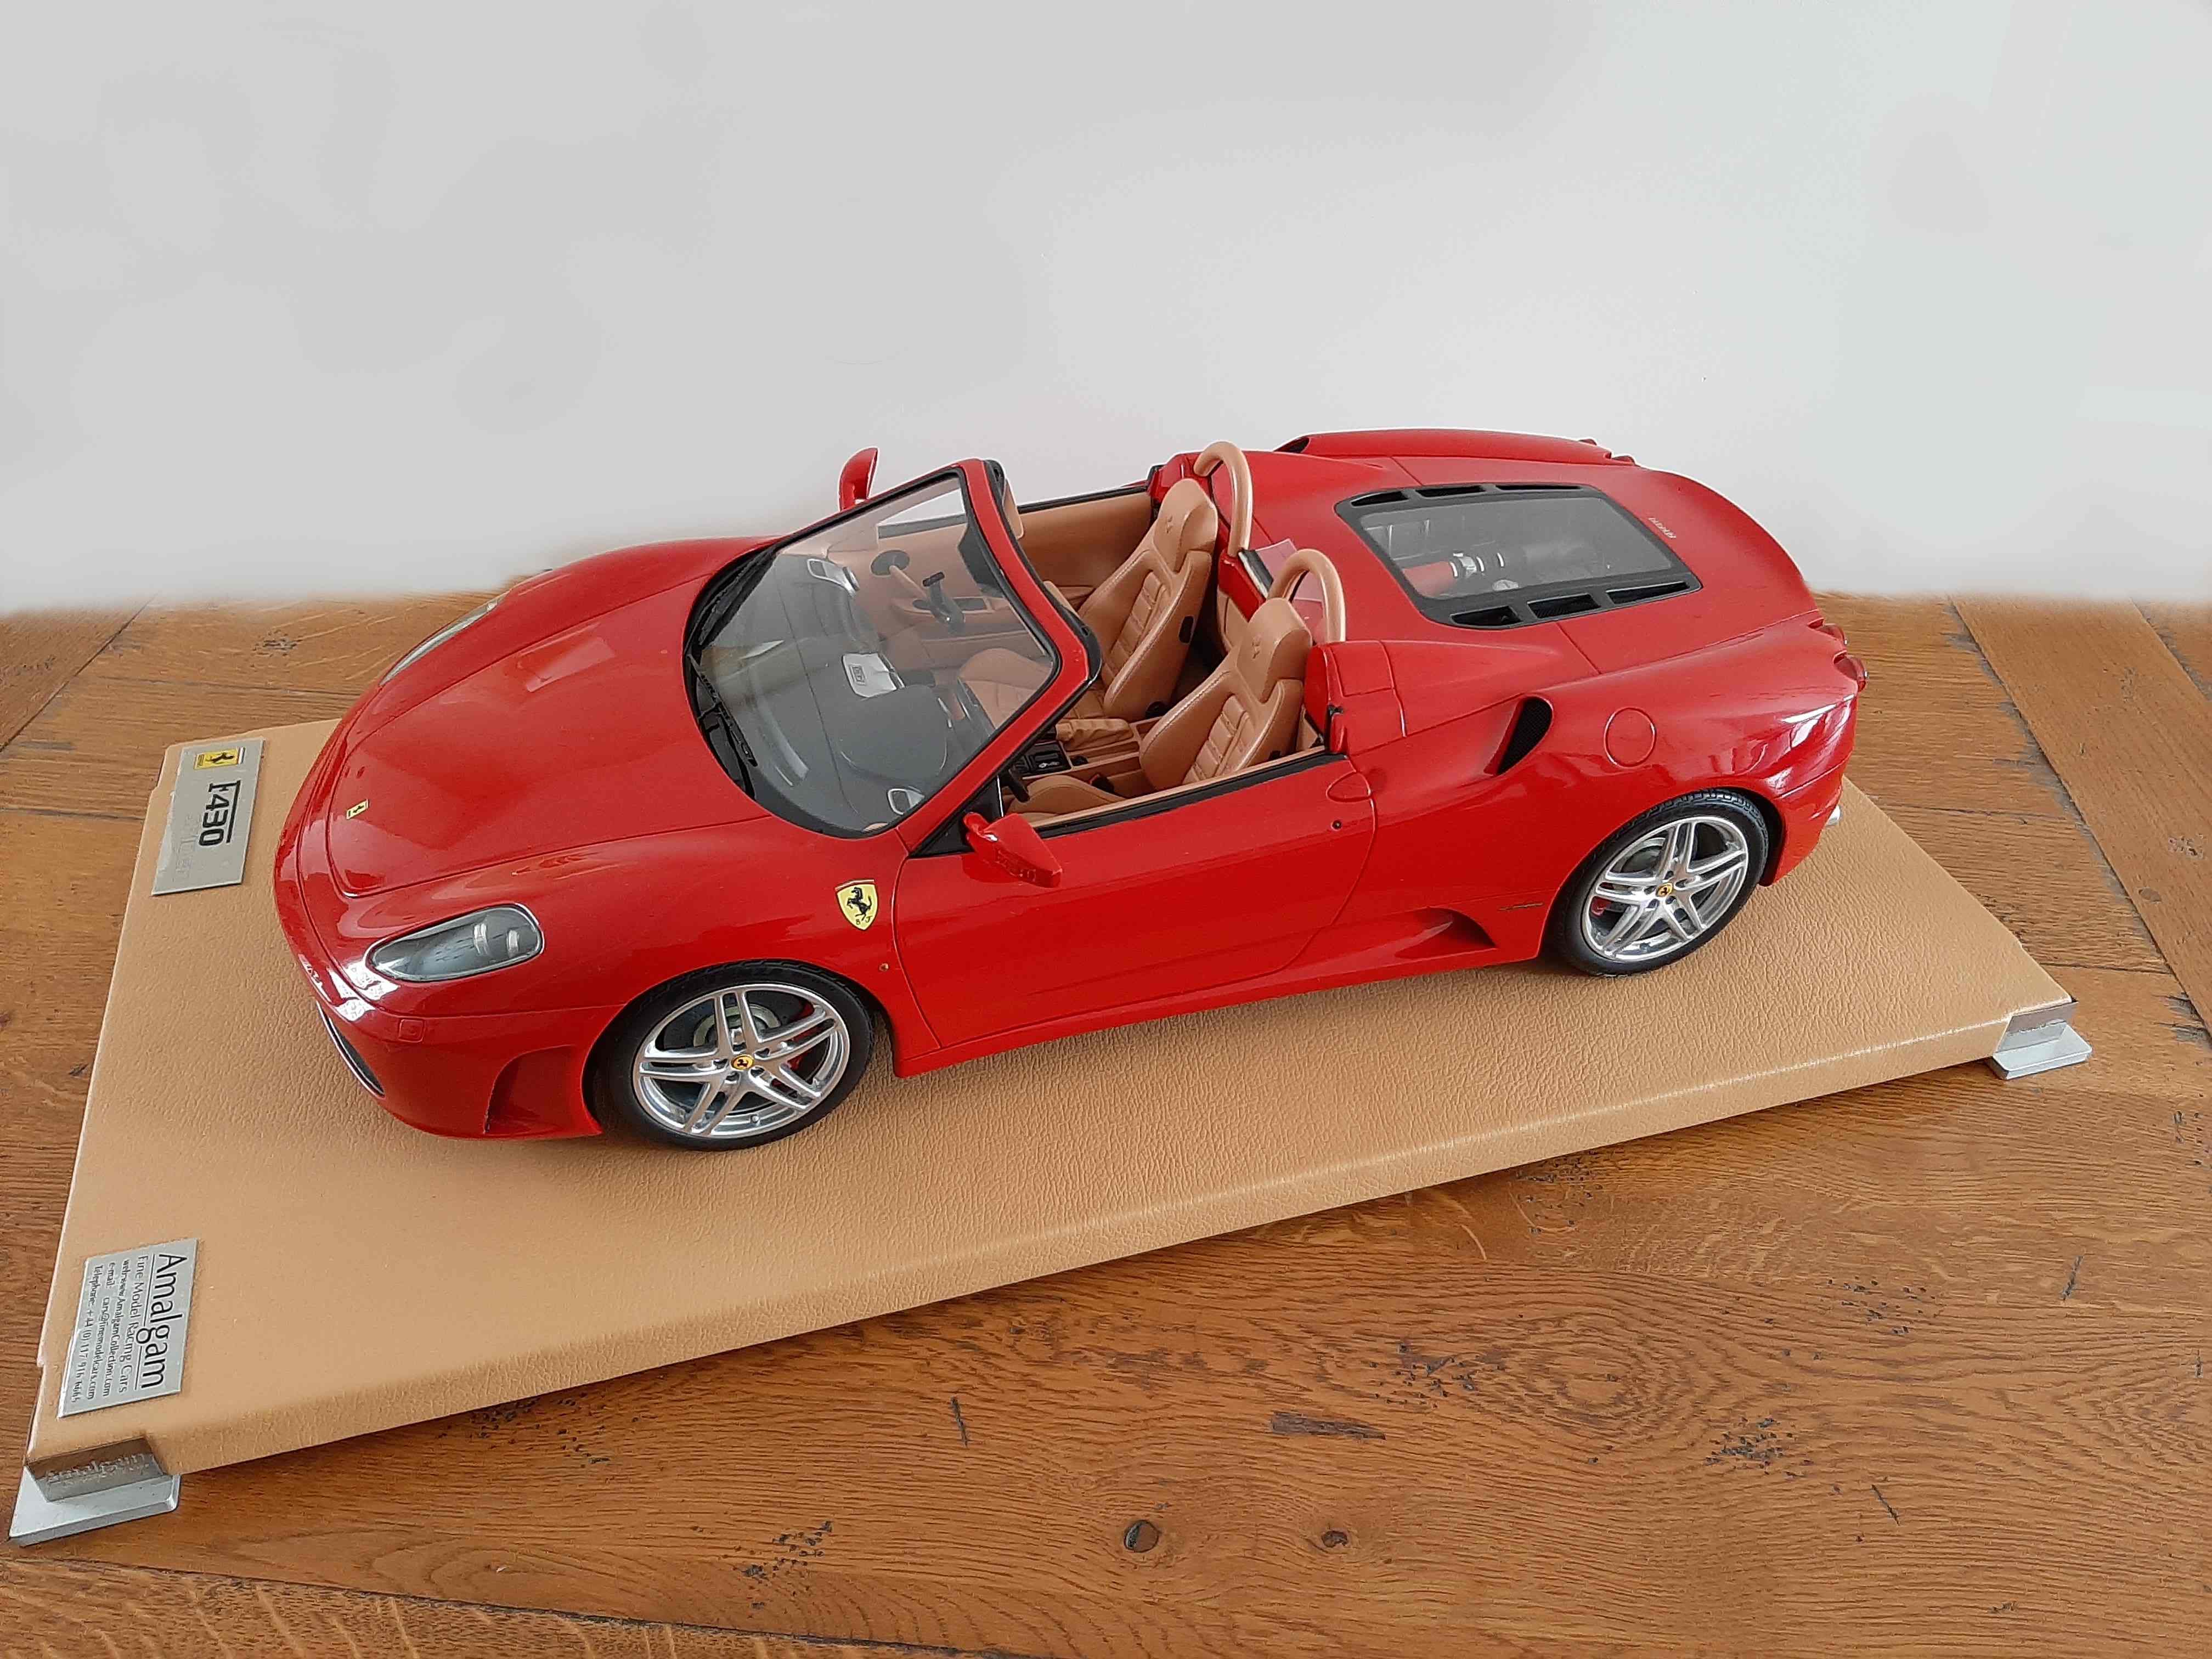 Amalgam : Ferrari F430 Spyder in 1/8 scale